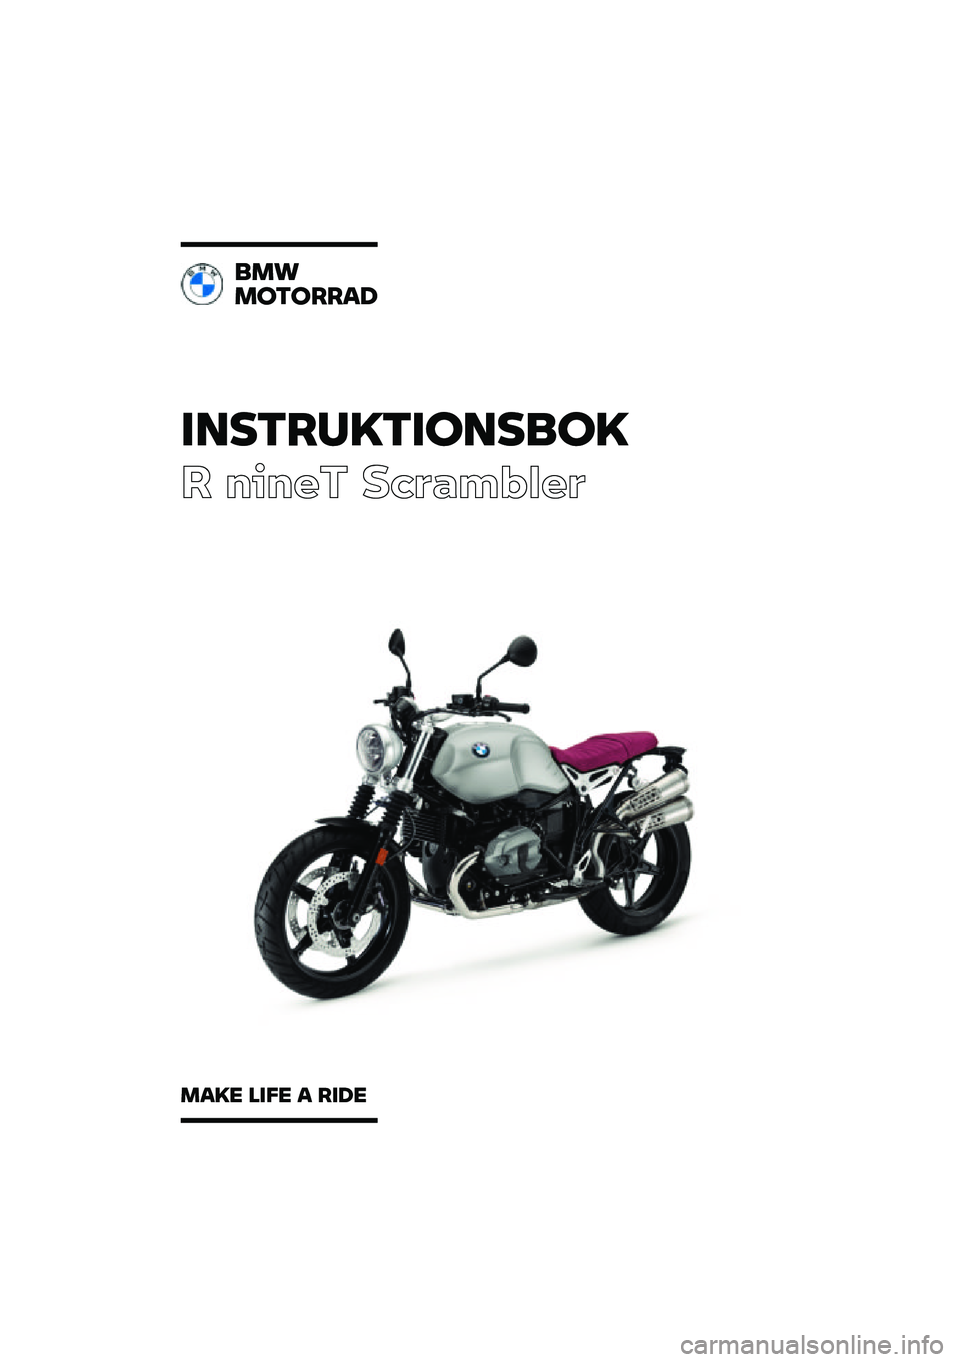 BMW MOTORRAD R NINE T SCRAMBLER 2021  Instruktionsbok (in Swedish) �������\b���	���
�	�\b
� ����� ��\b�	�
��\f�
��	
�
��\f
��	��	���
�
��
�\b� ���� �
 ���� 